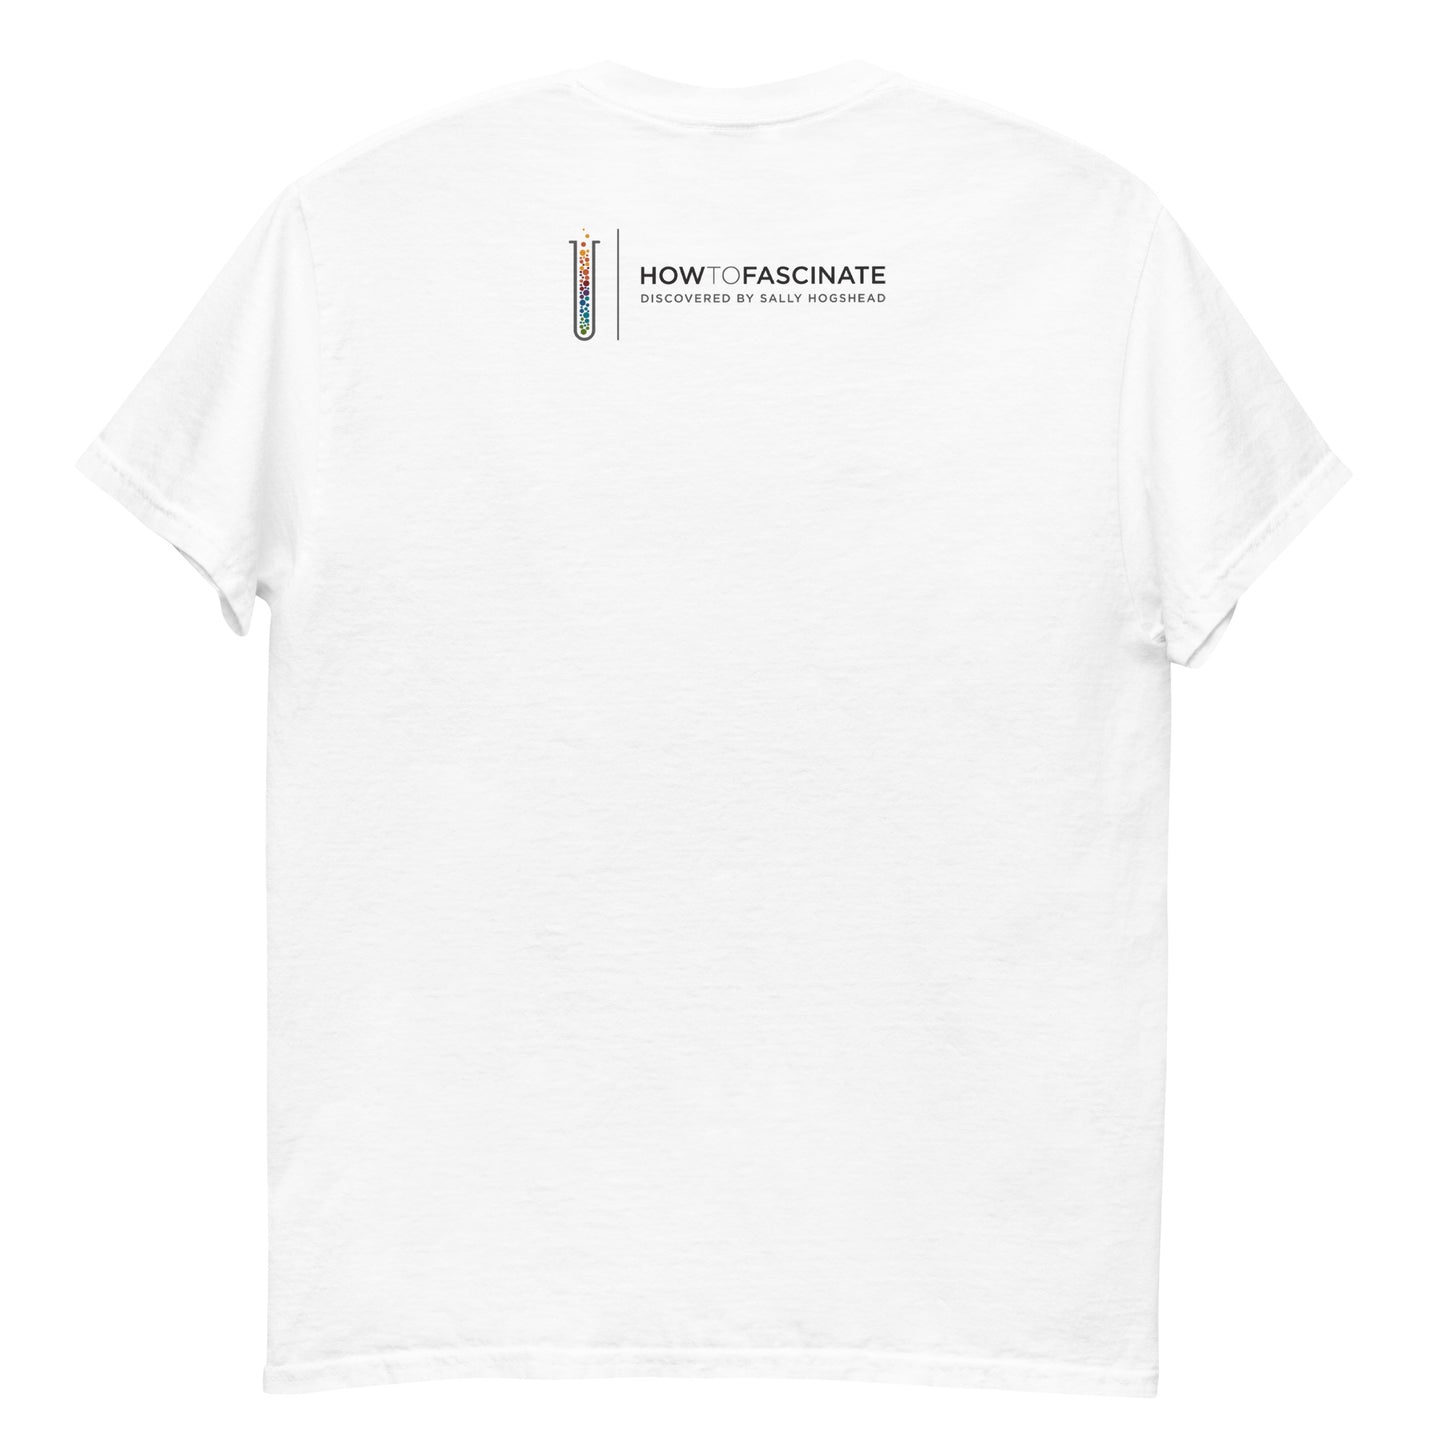 The Composer - Men's Archetype short sleeve t-shirt